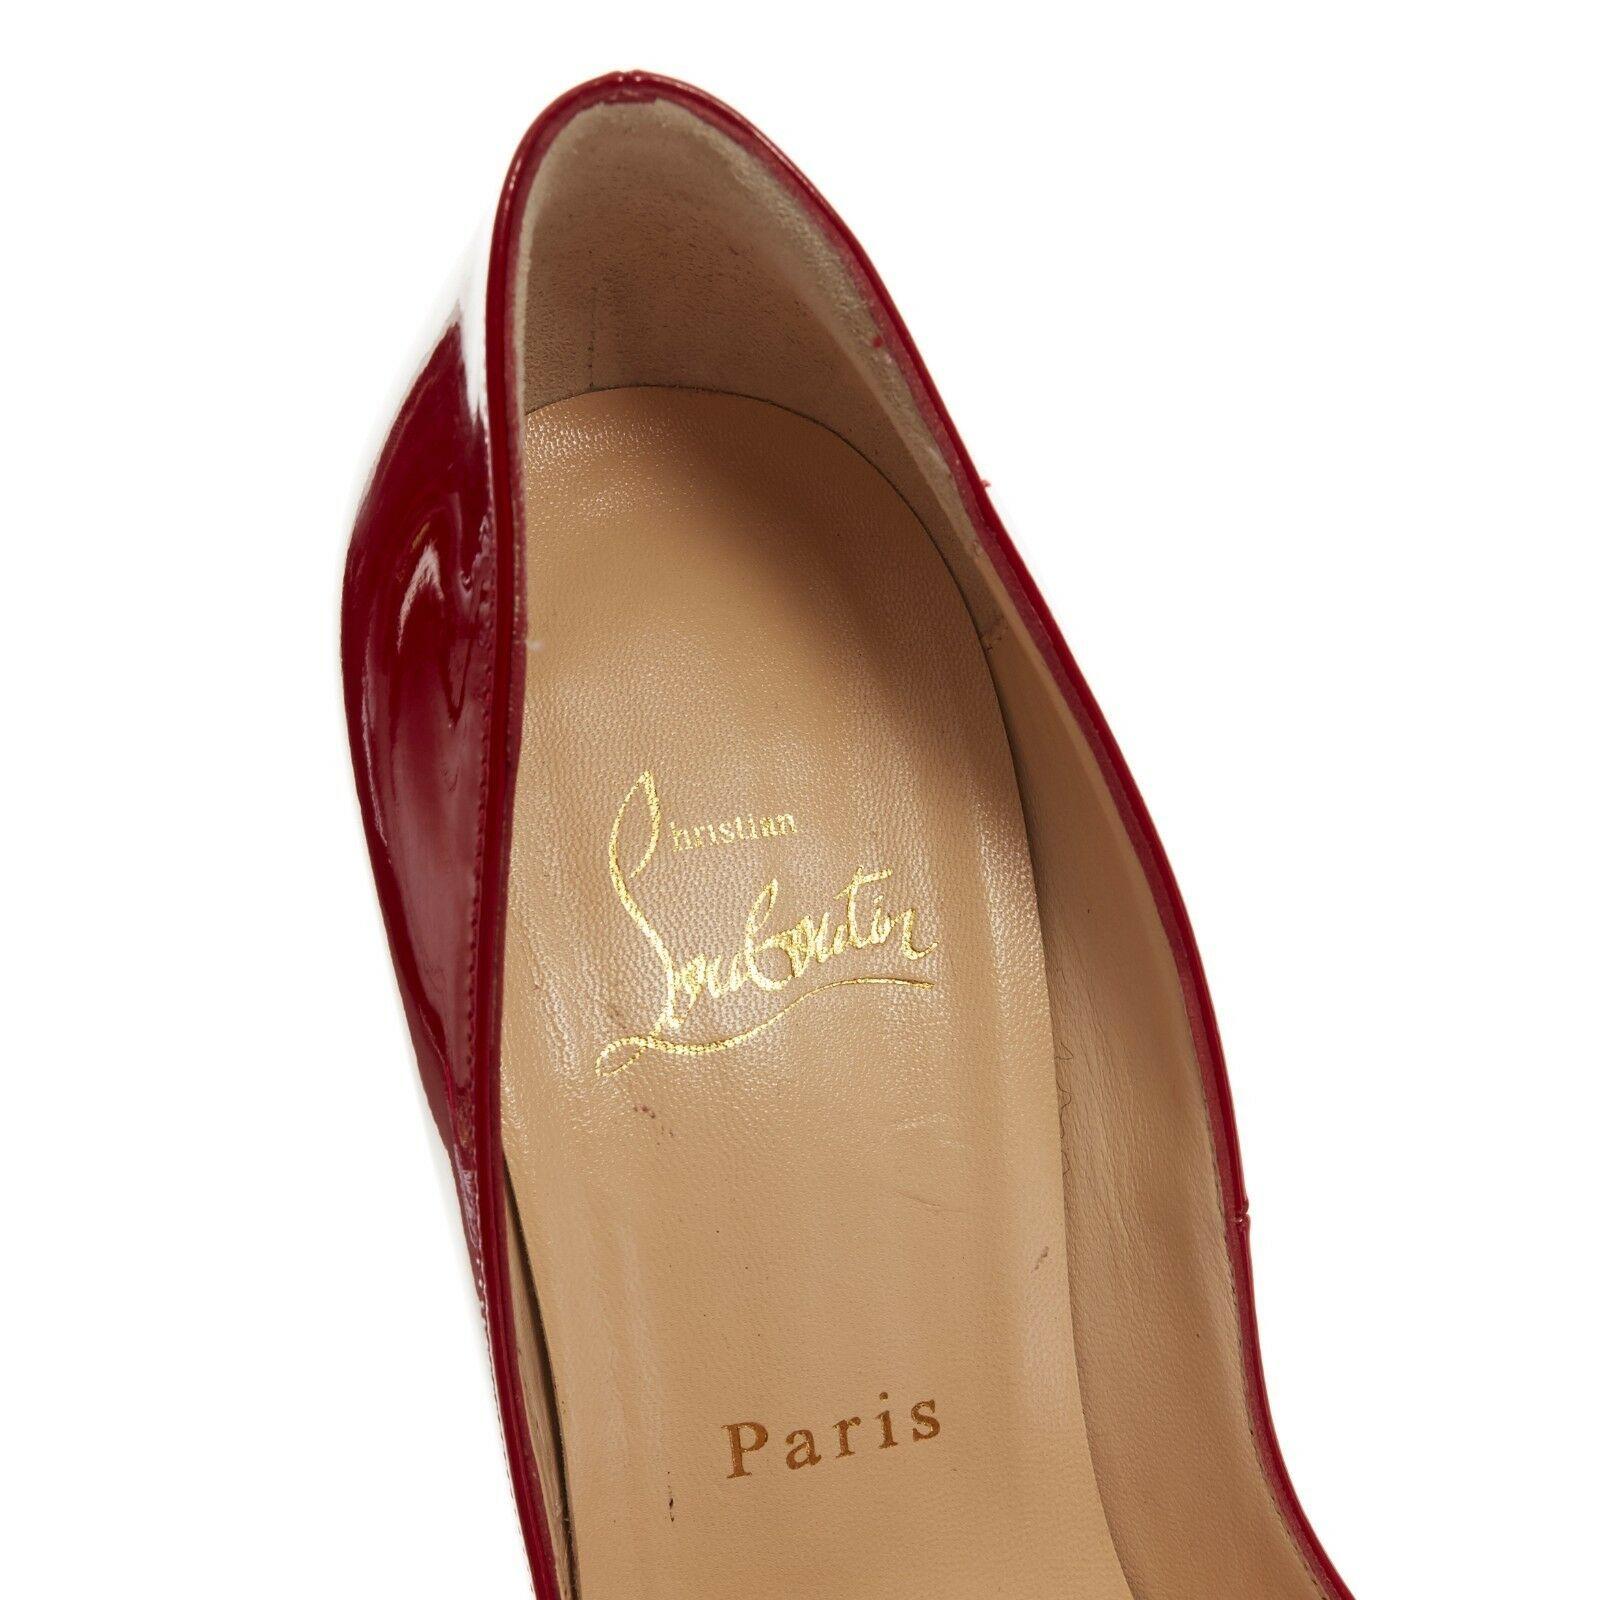 CHRISTIAN LOUBOUTIN Maryl 120 red patent curved heel peeptoe heels EU37.5 US7.5 4